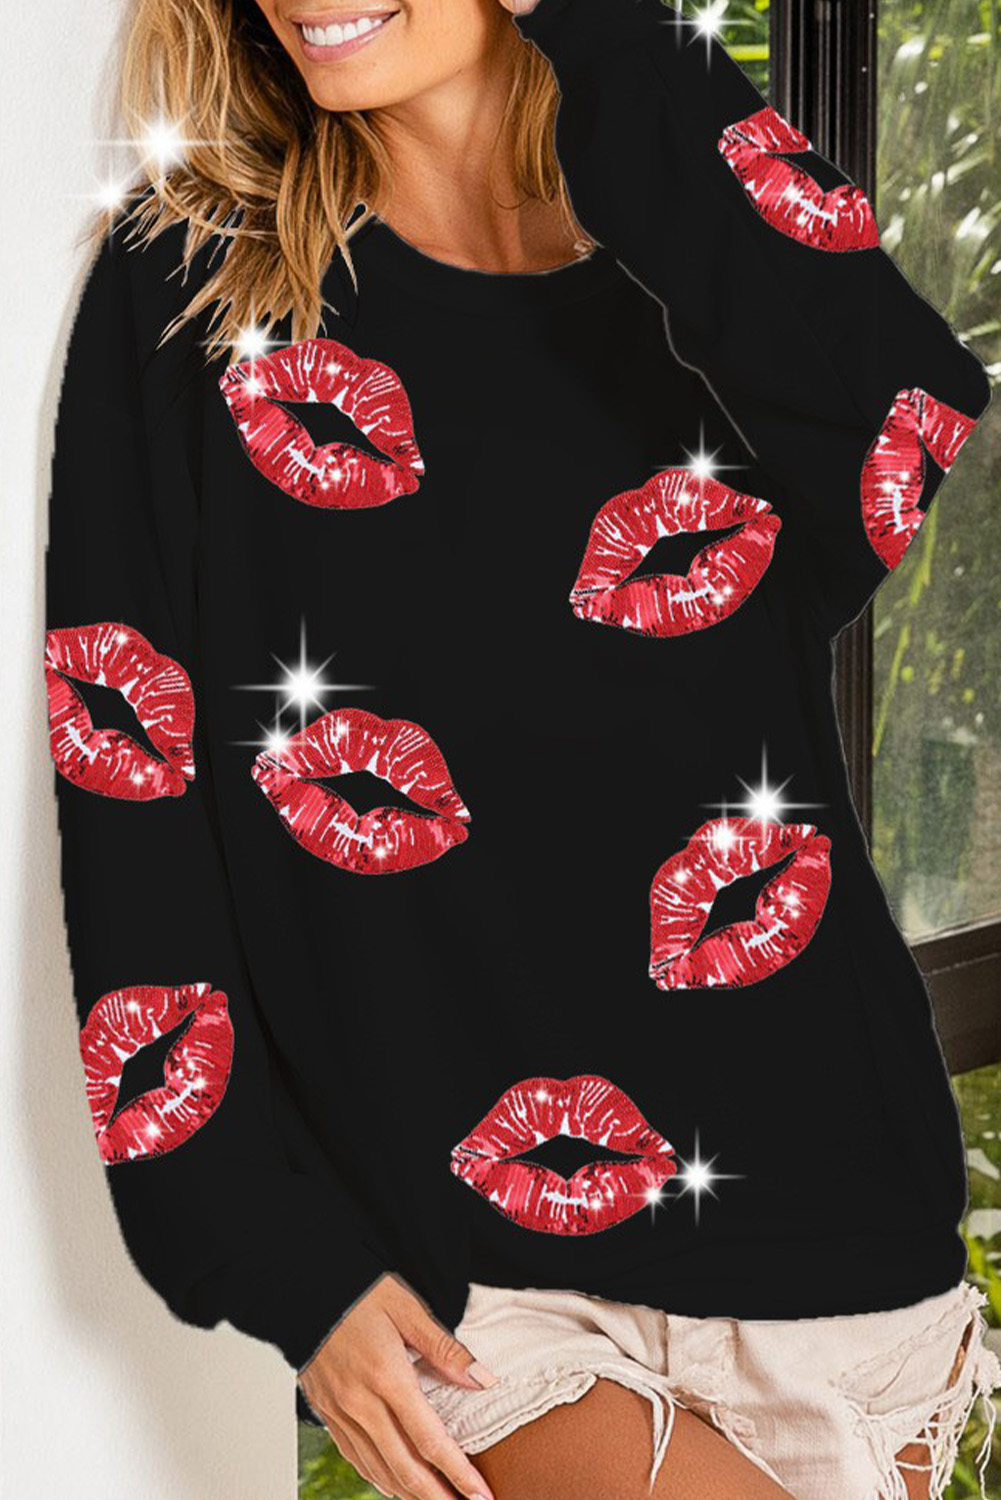  Black VALENTINE's Day Sequin Lip Print Graphic Sweatshirt